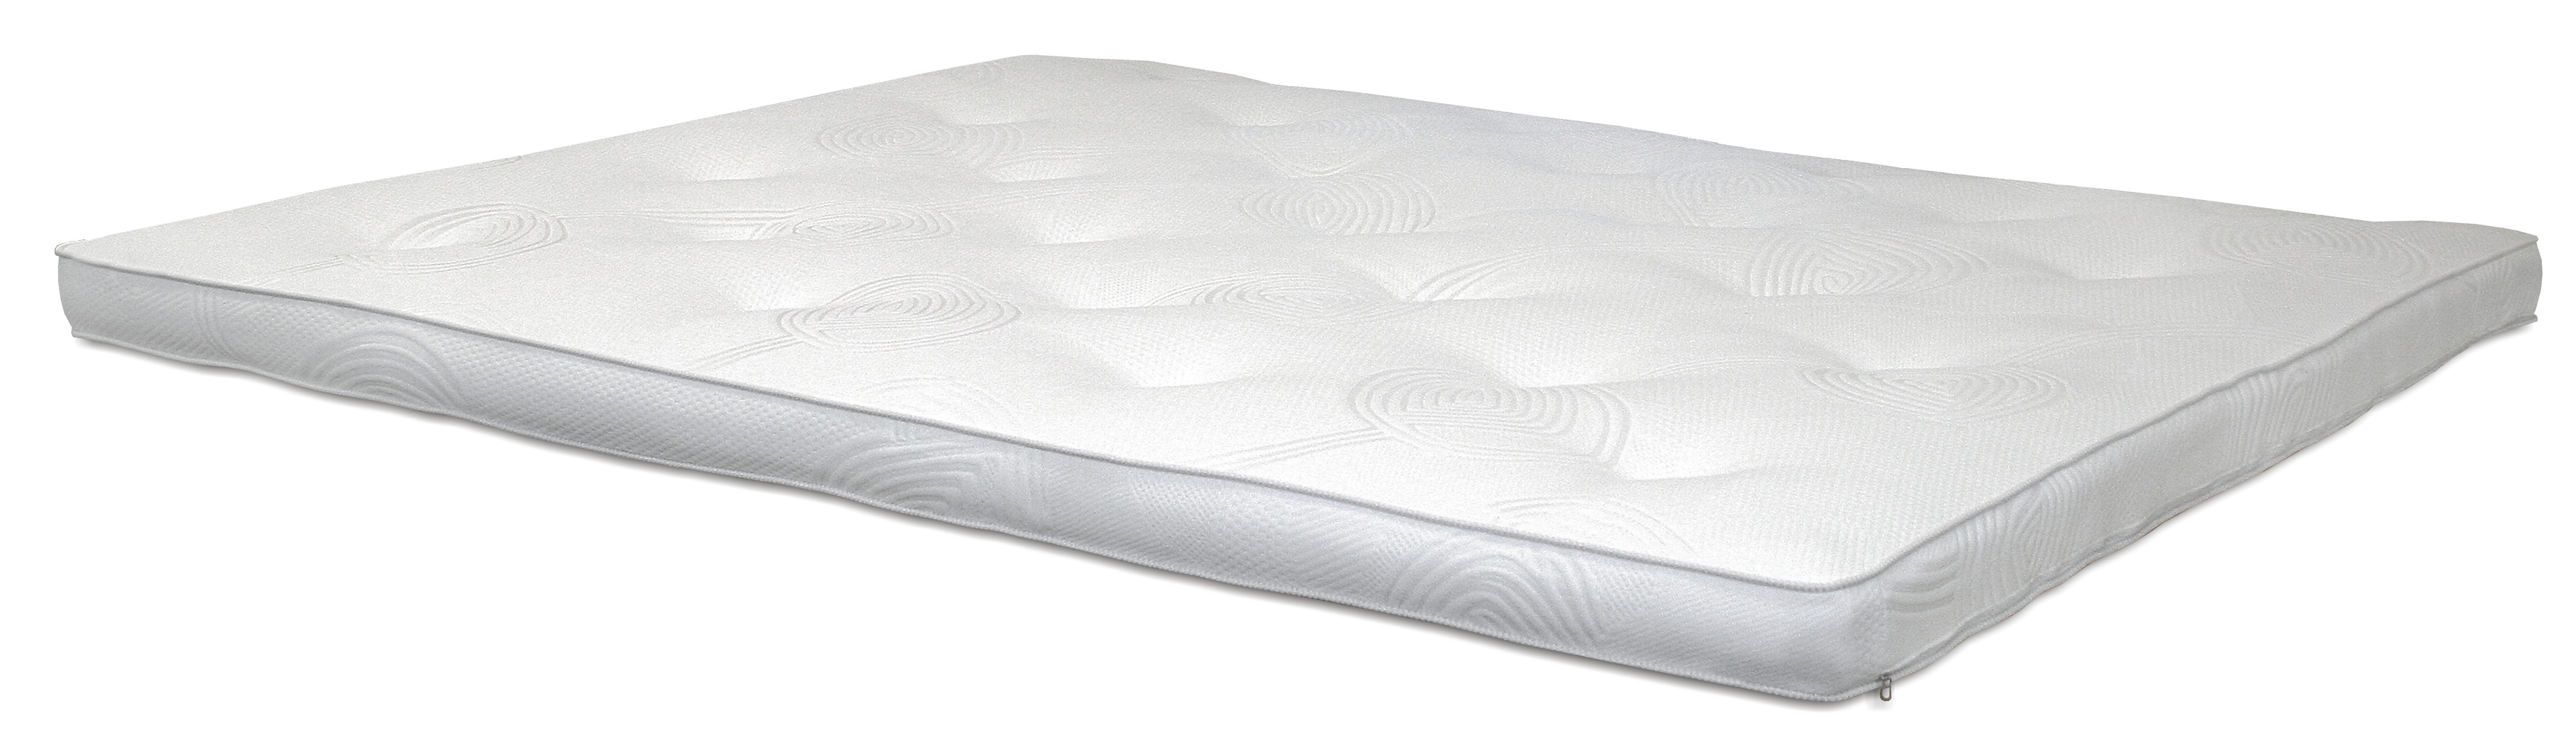 GRAND TOP mattress WHITE 1 7